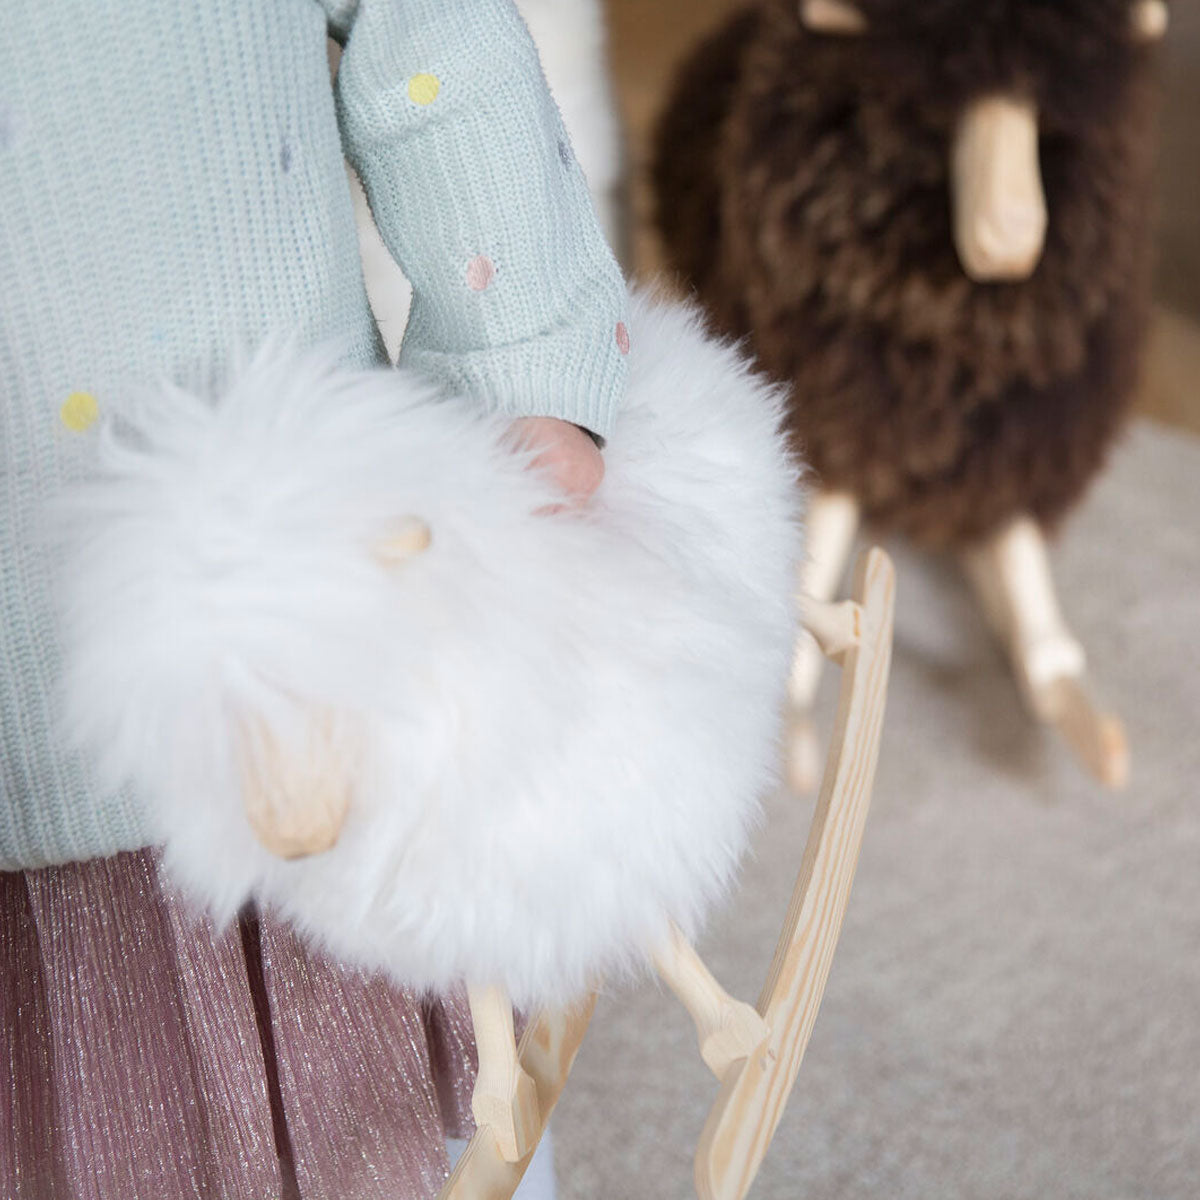 The Rocking Lamb │ Povl Kjer Design │ Made in Denmark │ Natural Black Long Wool │ Small